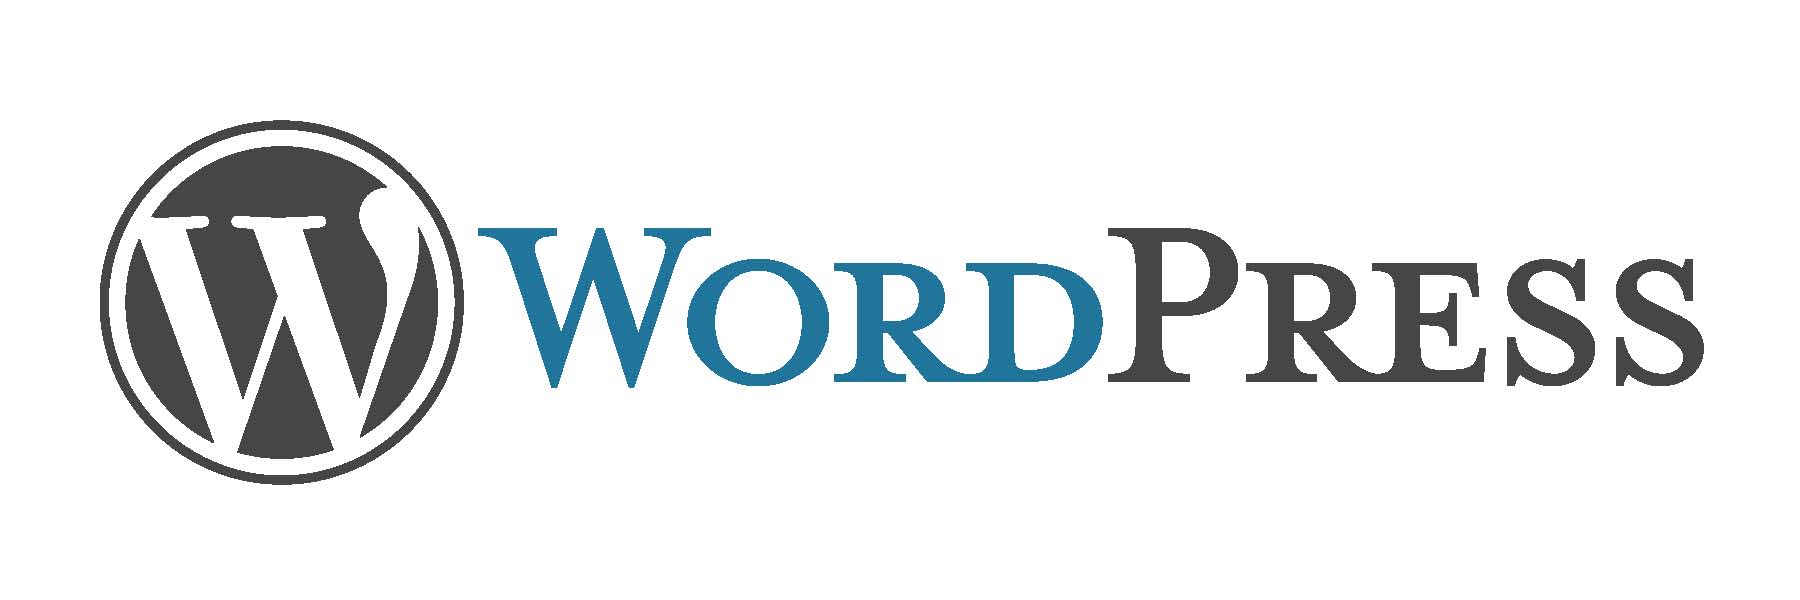 wordpress-logo-hoz-rgb[1]